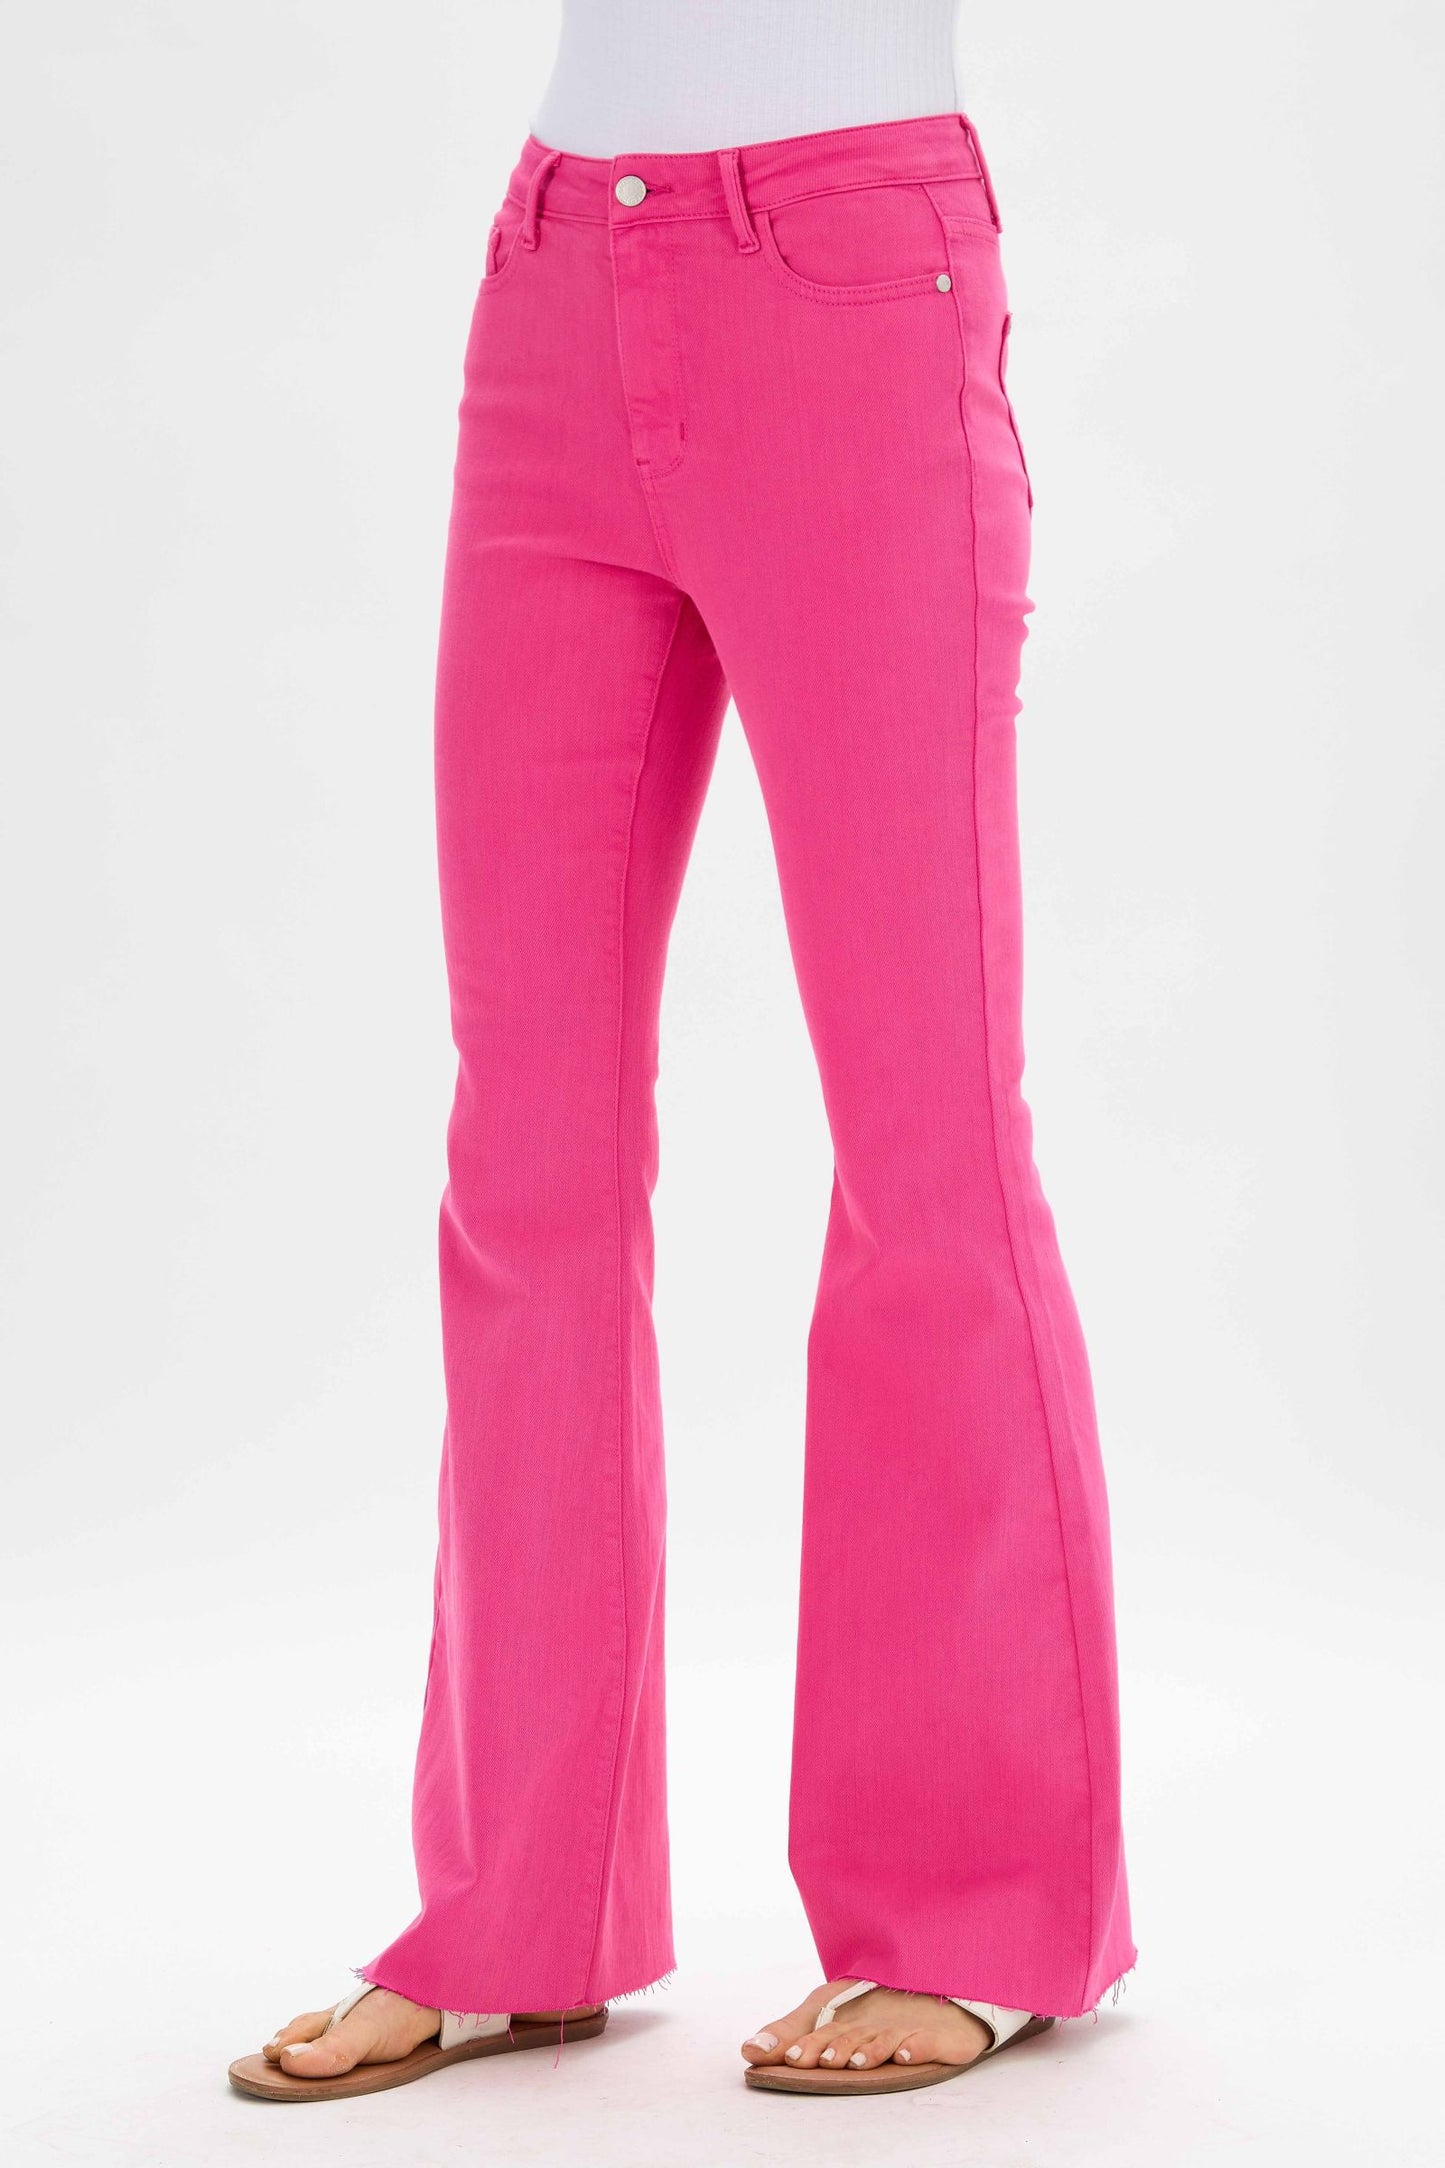 Hot Pink High-Waist Flare Jeans